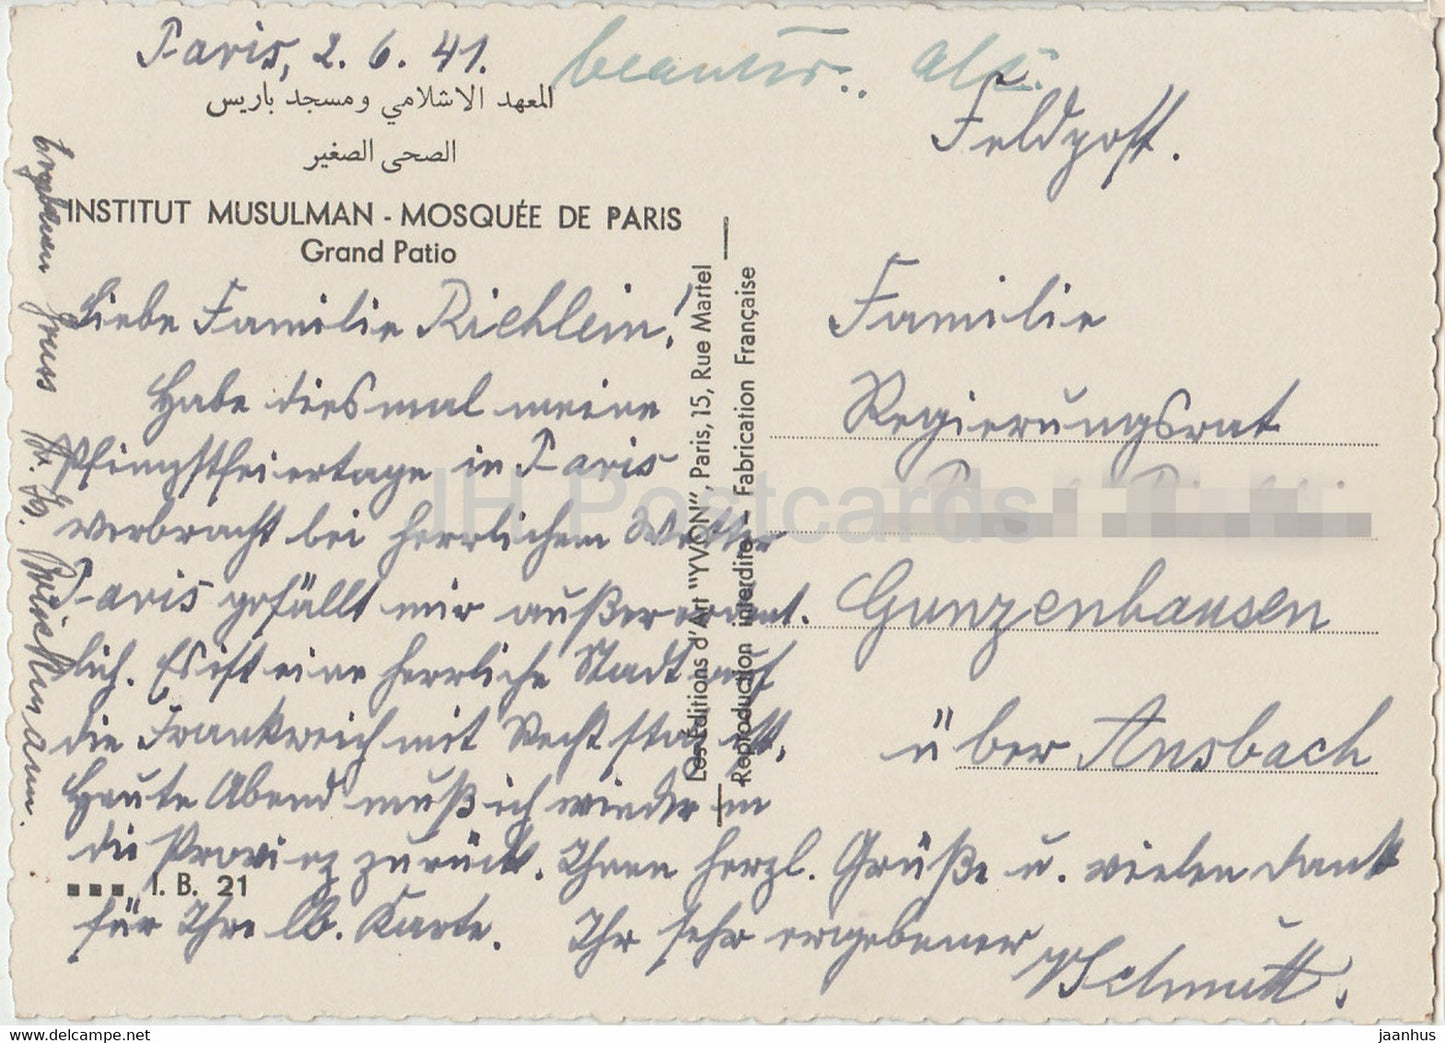 Paris - Institut Musulman - Mosquée de Paris - Grand Patio - 1941 - France - occasion